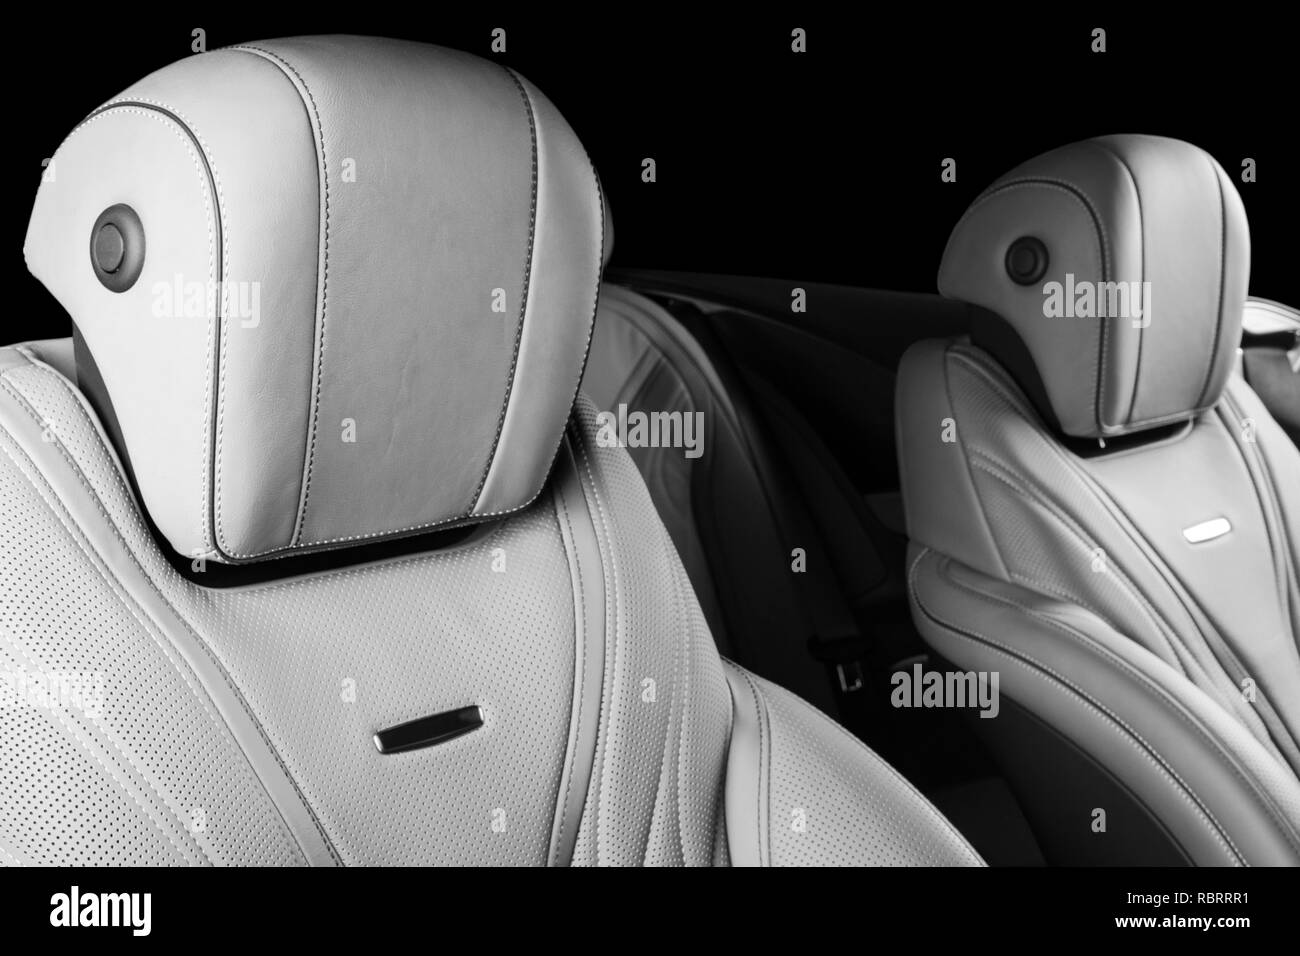 Sitze concept car -Fotos und -Bildmaterial in hoher Auflösung – Alamy